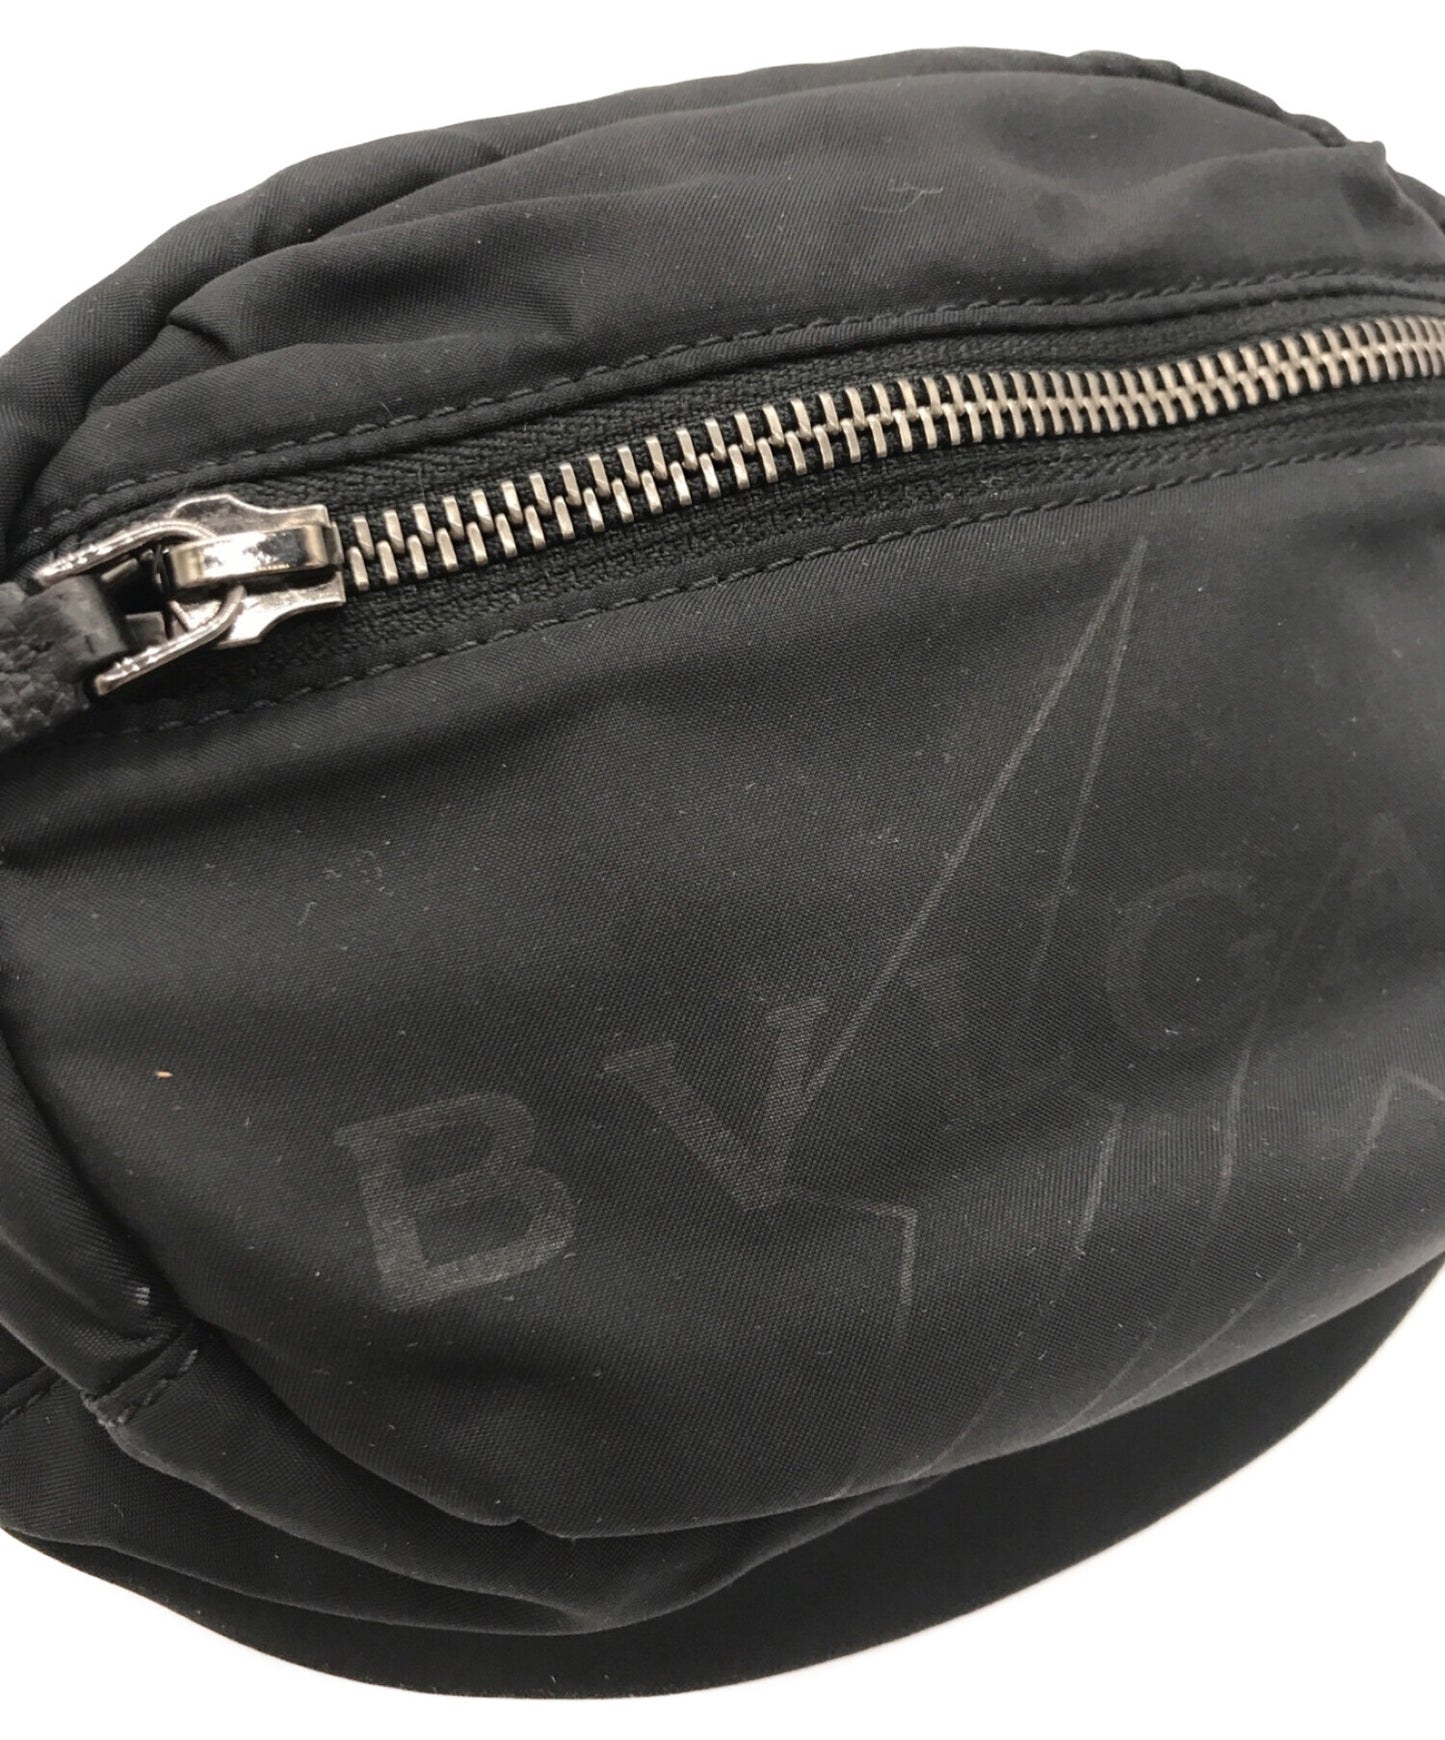 Bvlgari Limited Collaboration Body Bag 290773